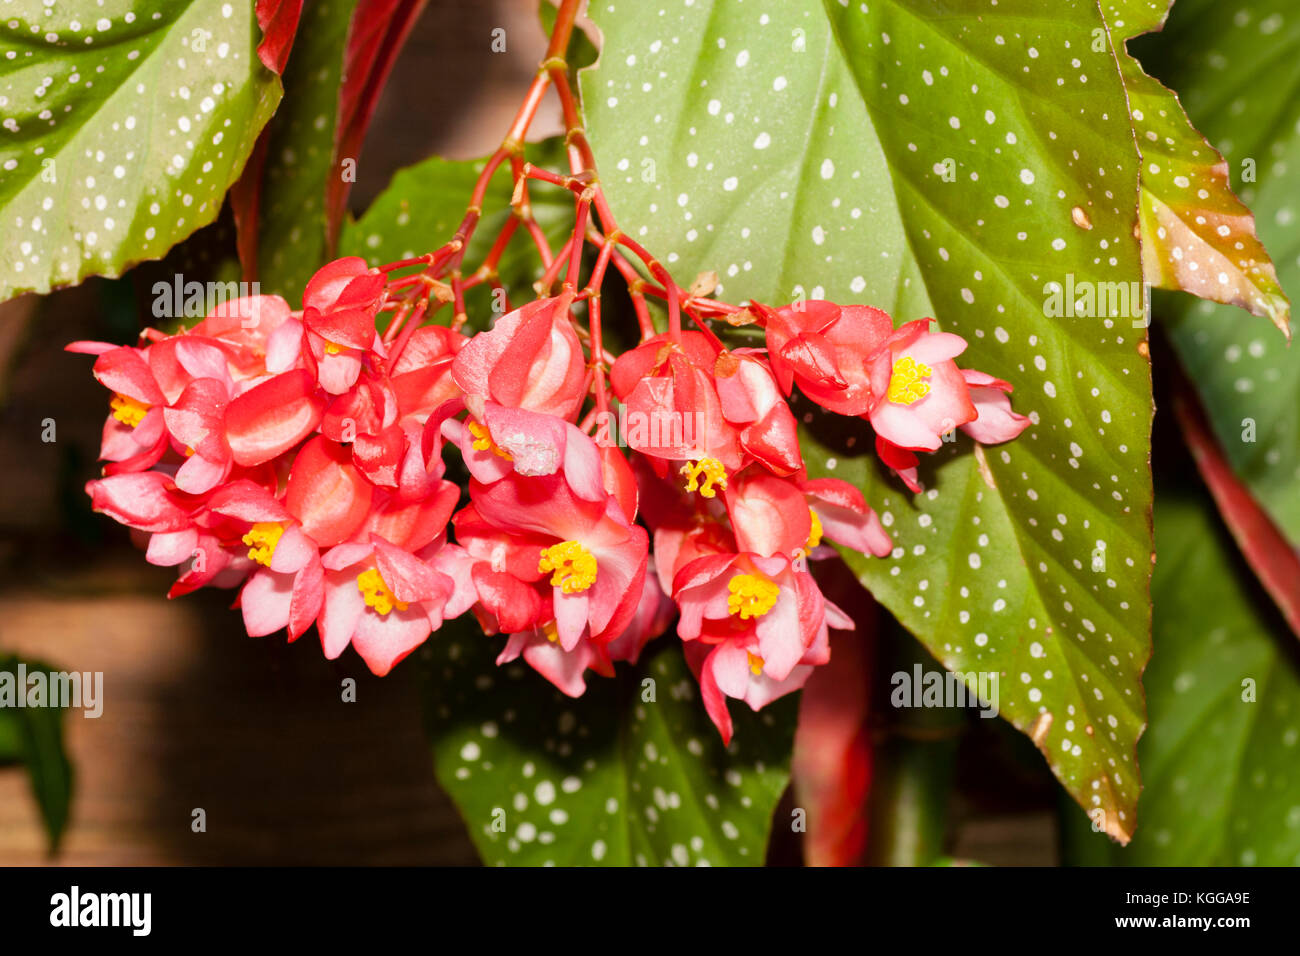 Red flower truss of the cane stemmed begonia hybrid, Begonia 'Lucerna' Stock Photo